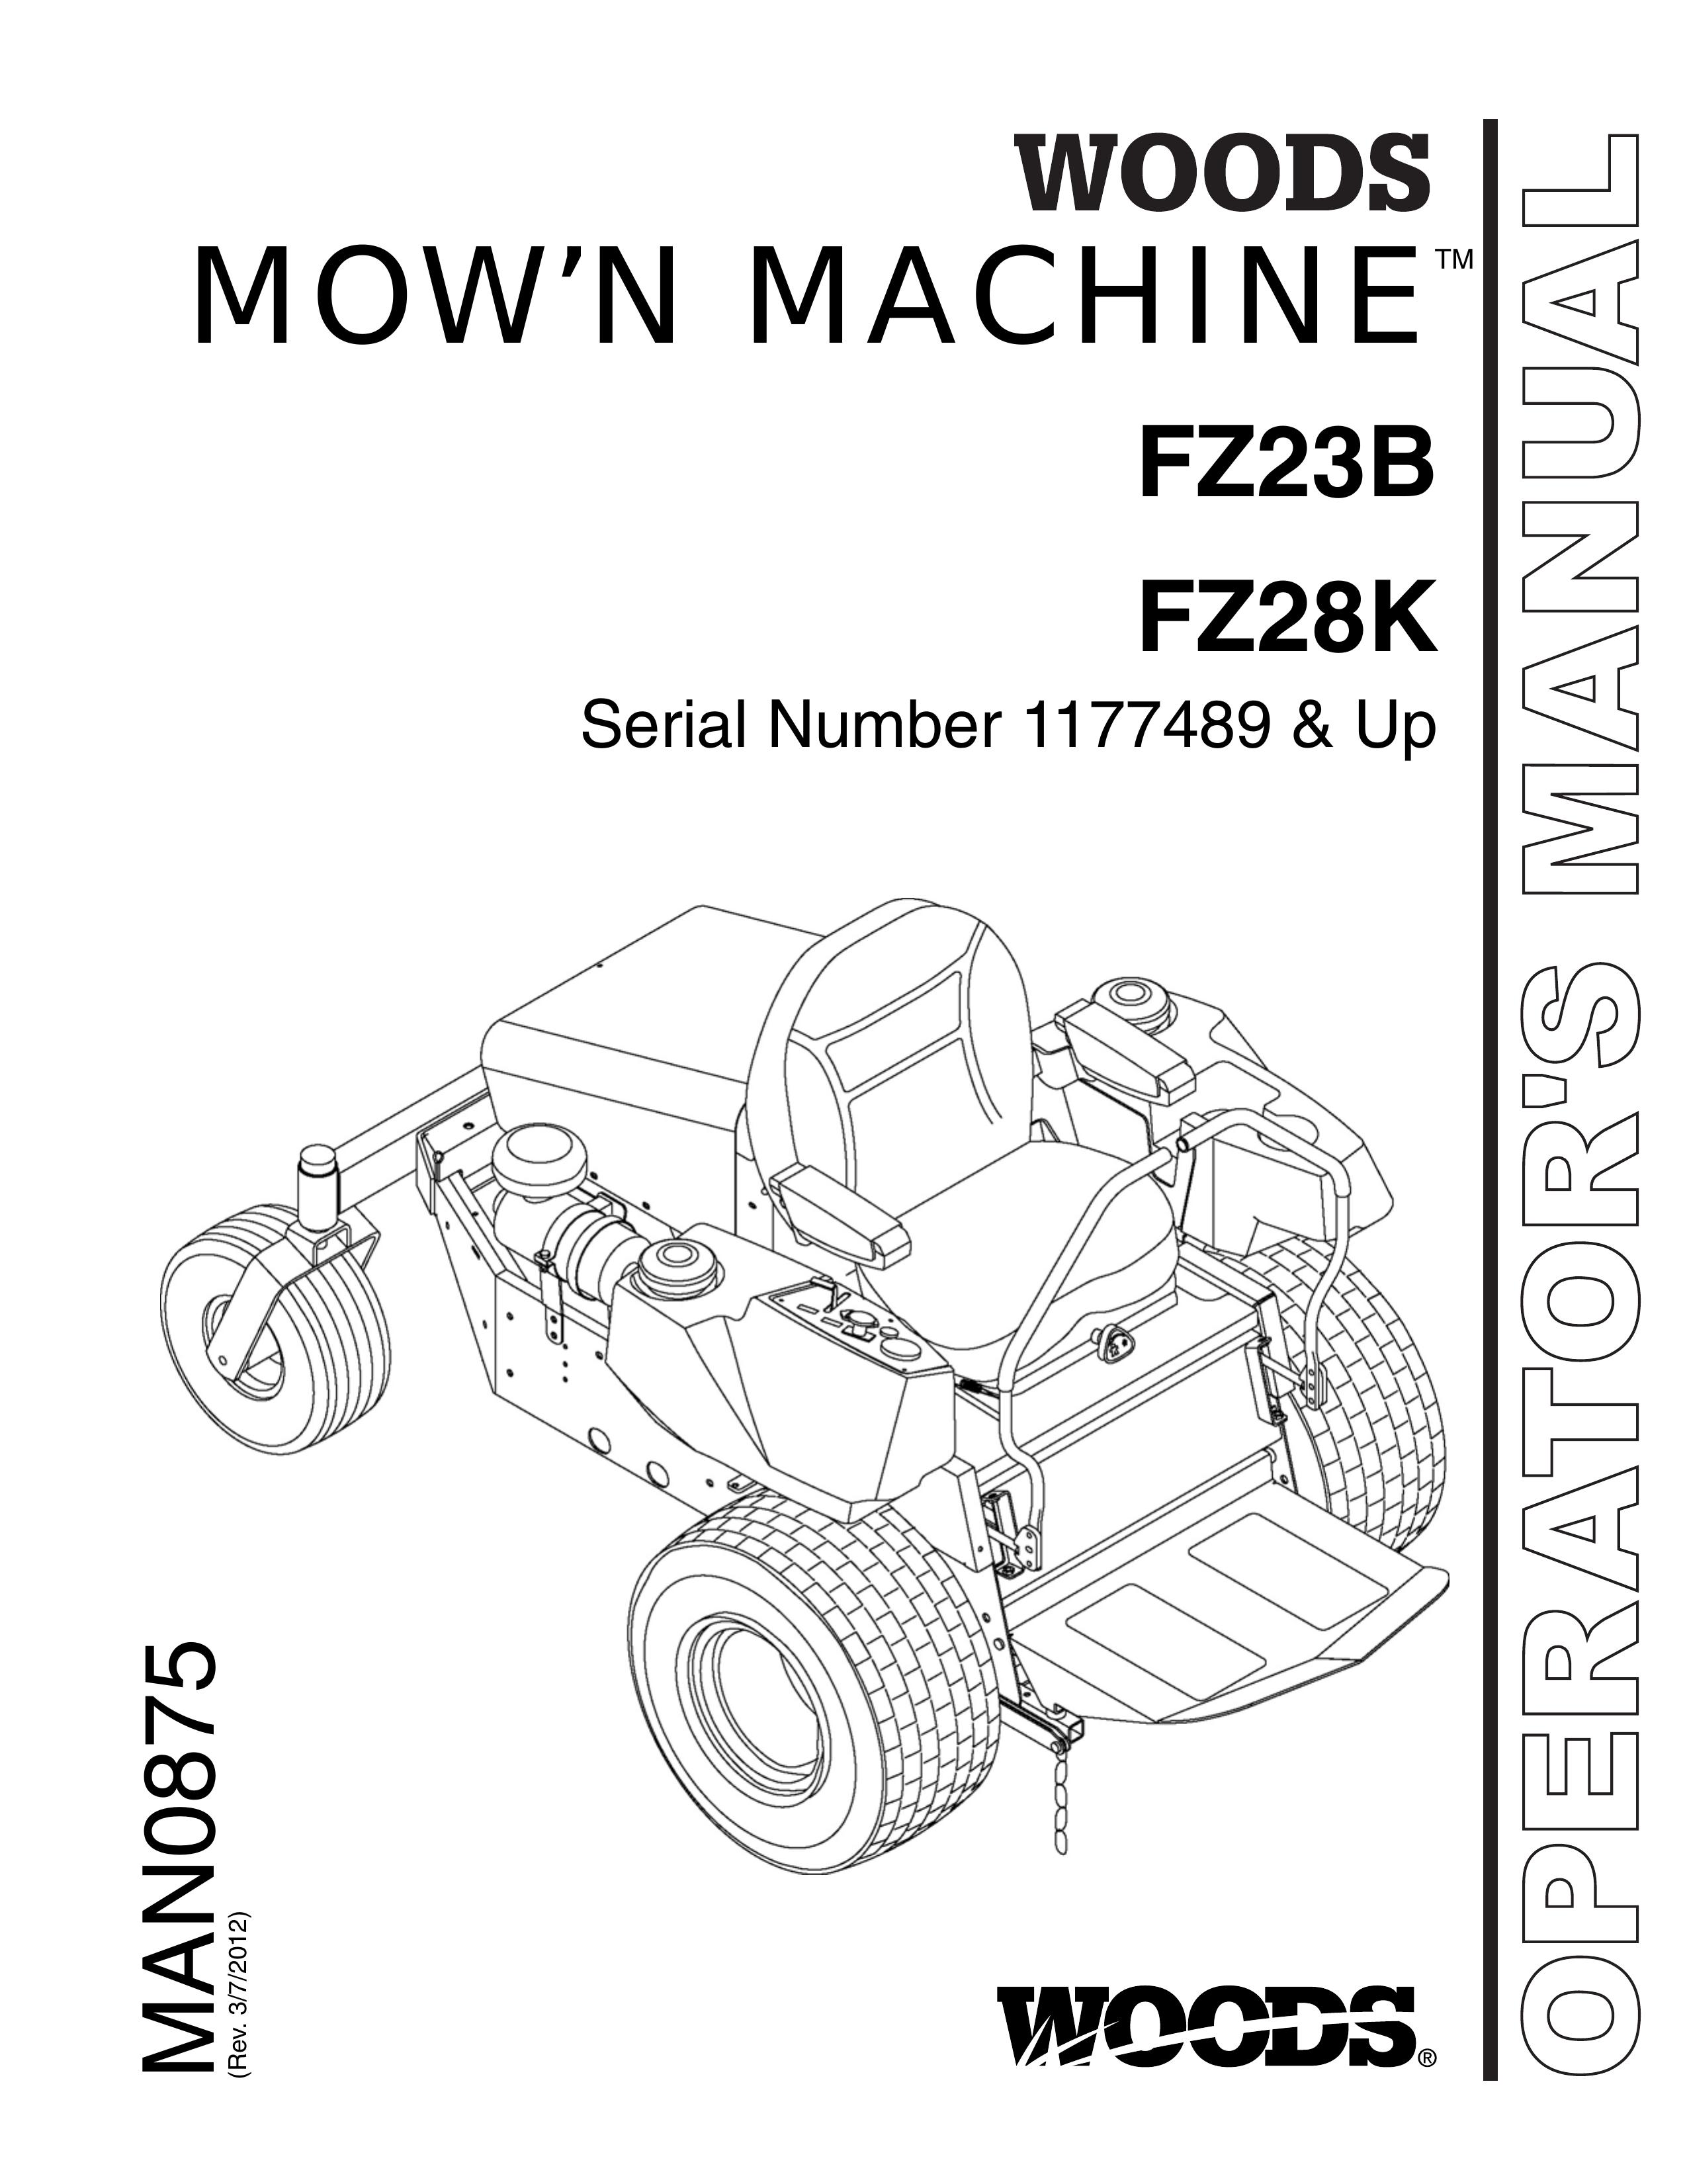 Woods Equipment FZ28K Lawn Mower User Manual